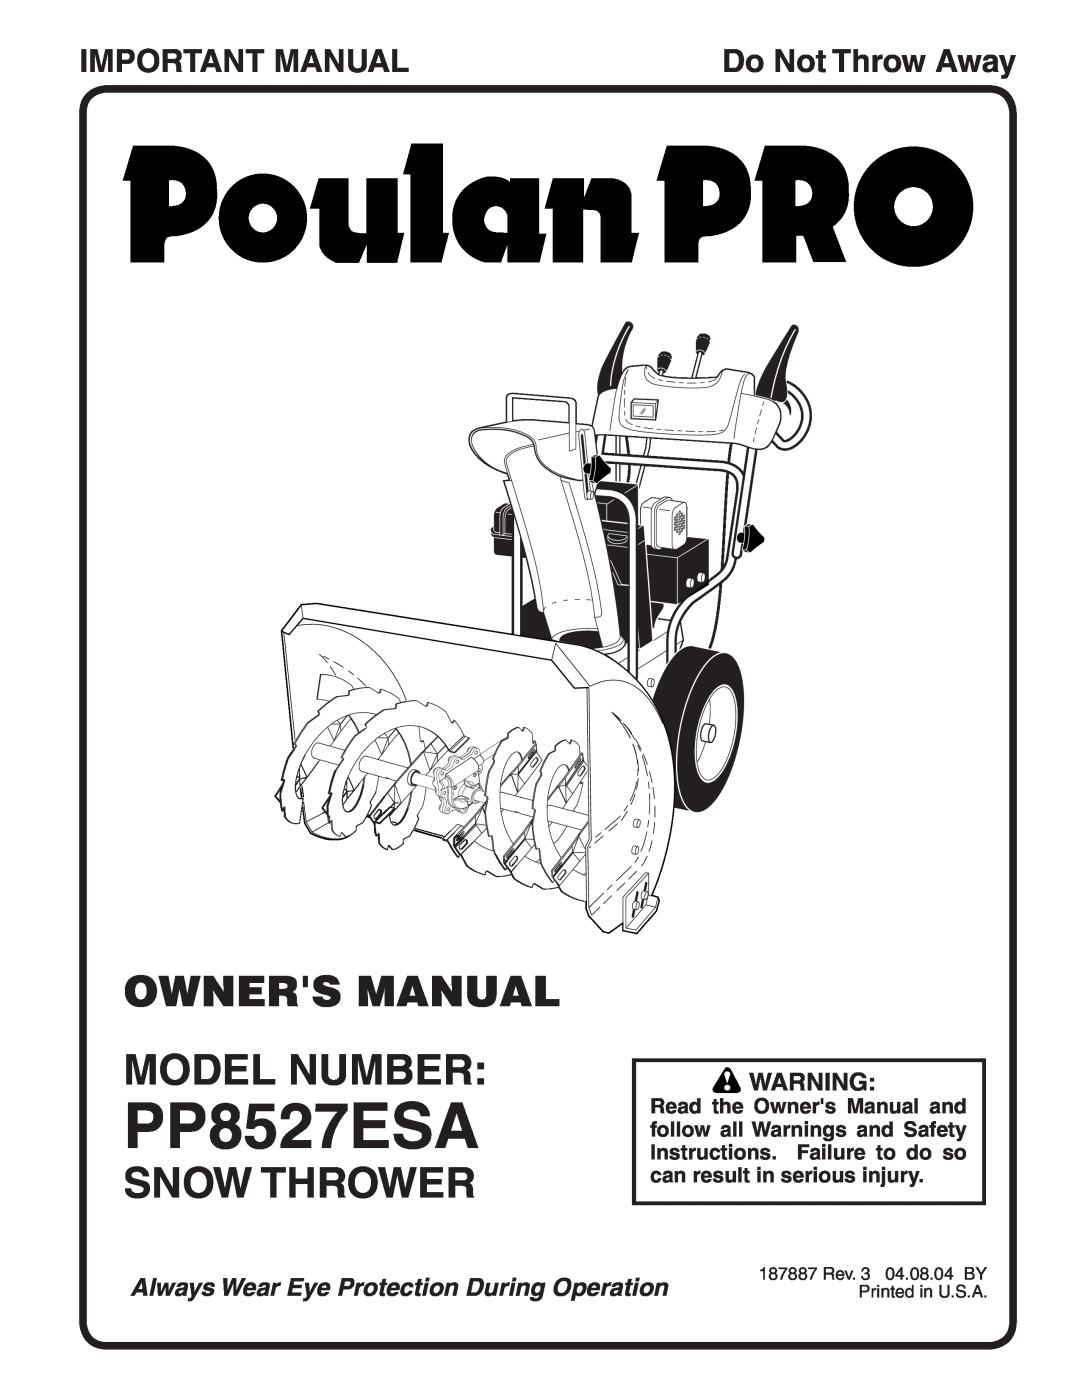 Poulan 187887 owner manual Snow Thrower, Important Manual, PP8527ESA, Do Not Throw Away 